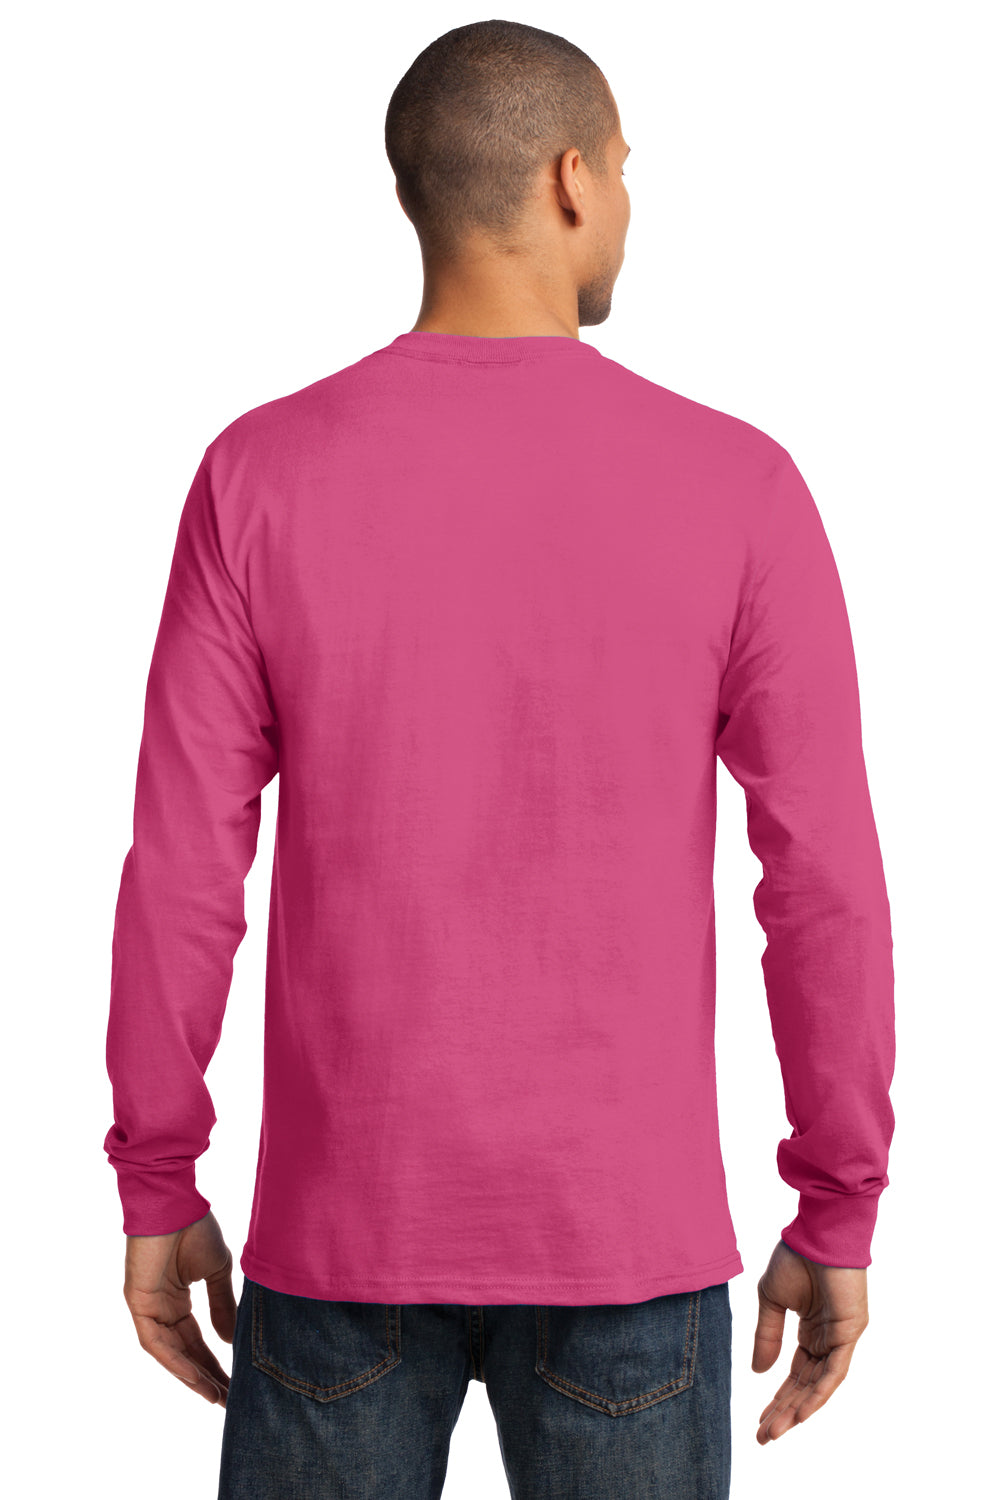 Port & Company PC61LS Mens Essential Long Sleeve Crewneck T-Shirt Sangria Pink Back